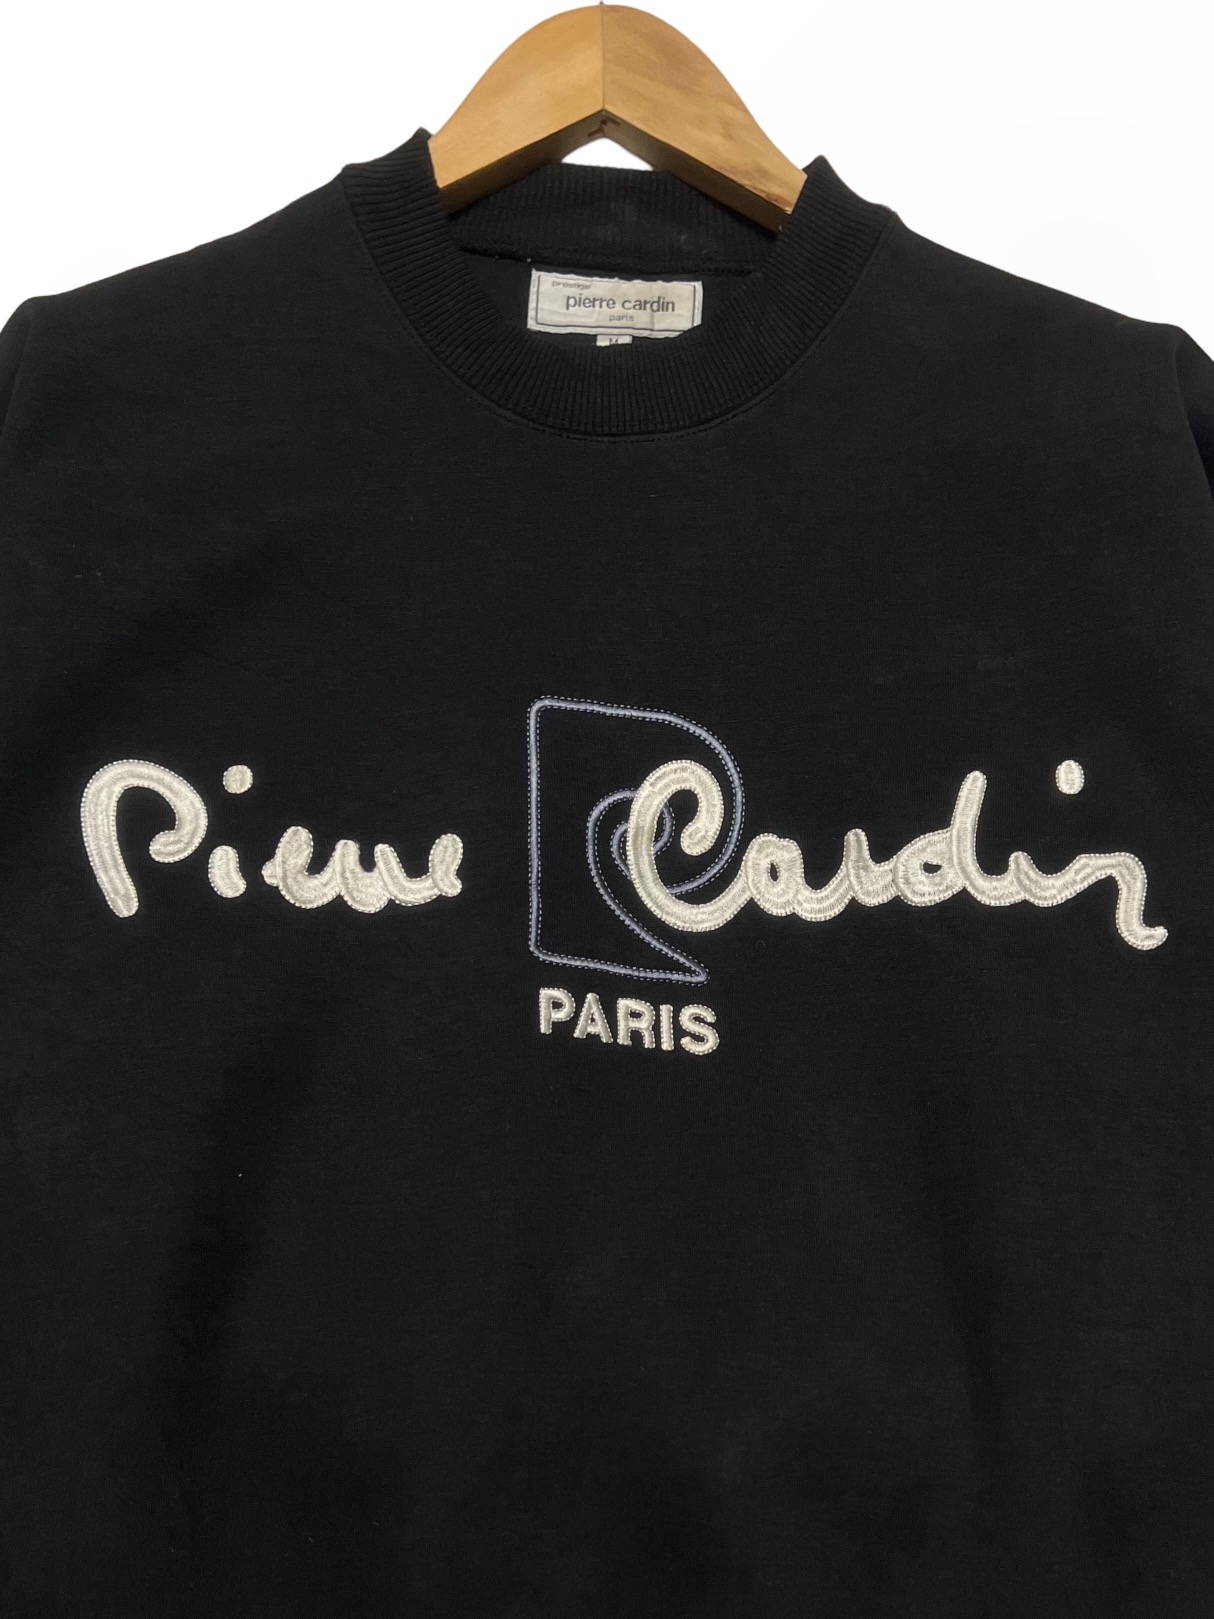 Pierre Cardin - VTG 90s PIERRE CARDIN PARIS EMBROIDERED BIG SPELLOUT LOGO - 1